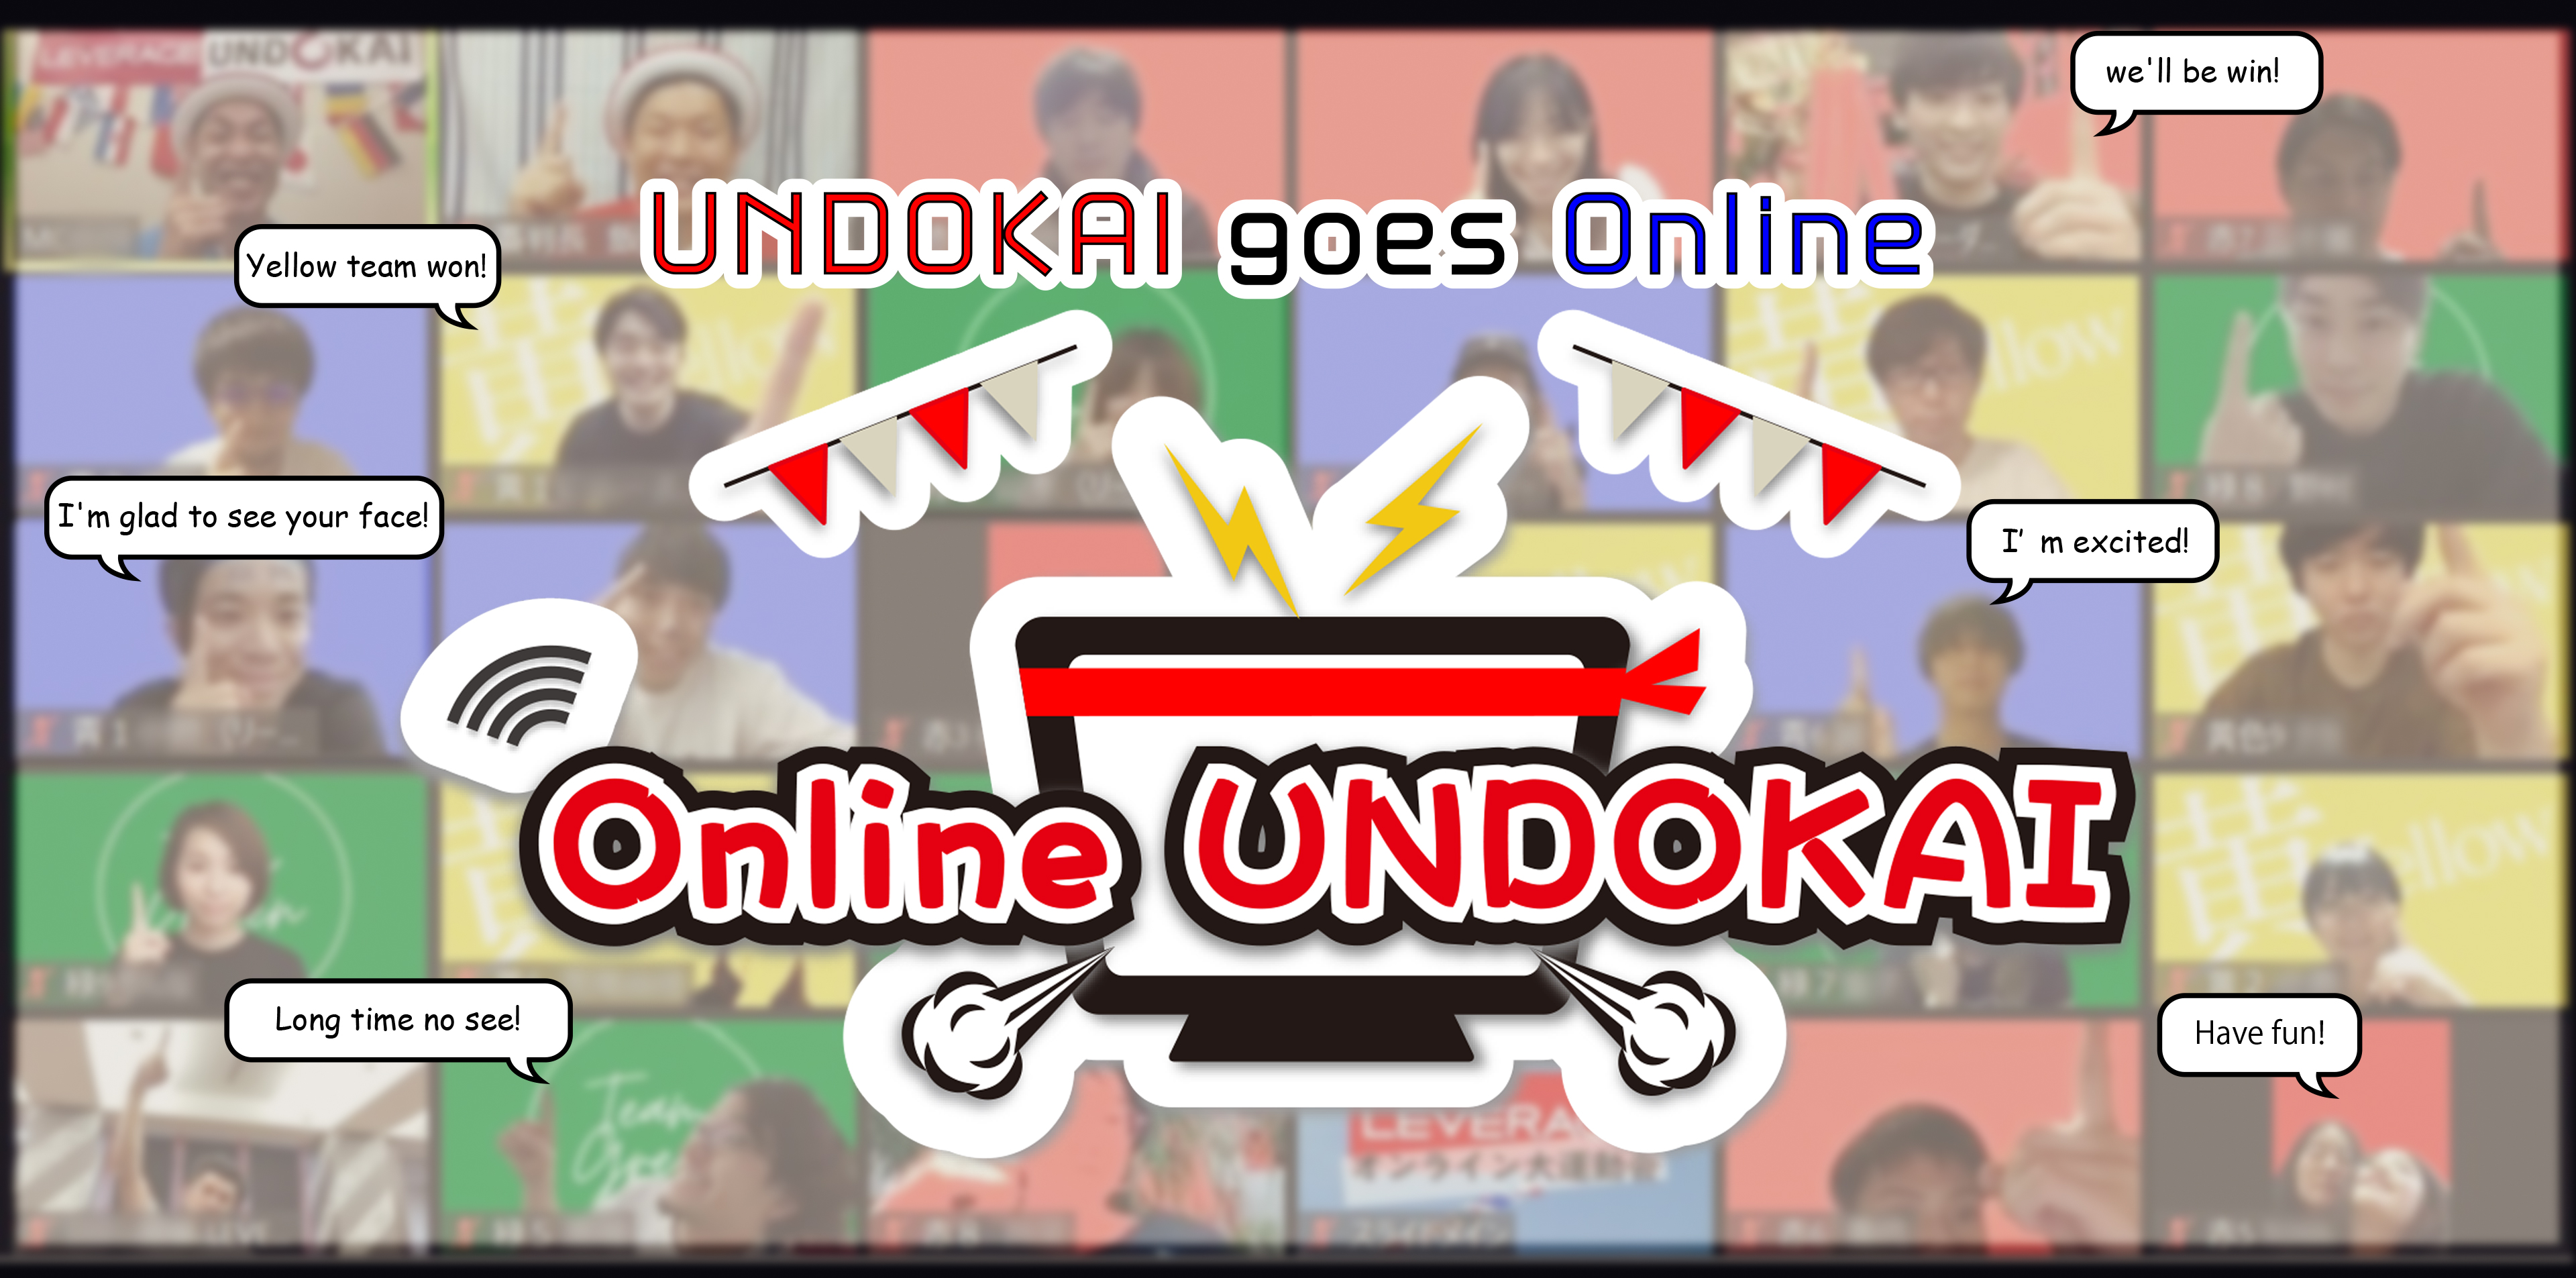 UNDOKAI goes Online. Online UNDOKAI